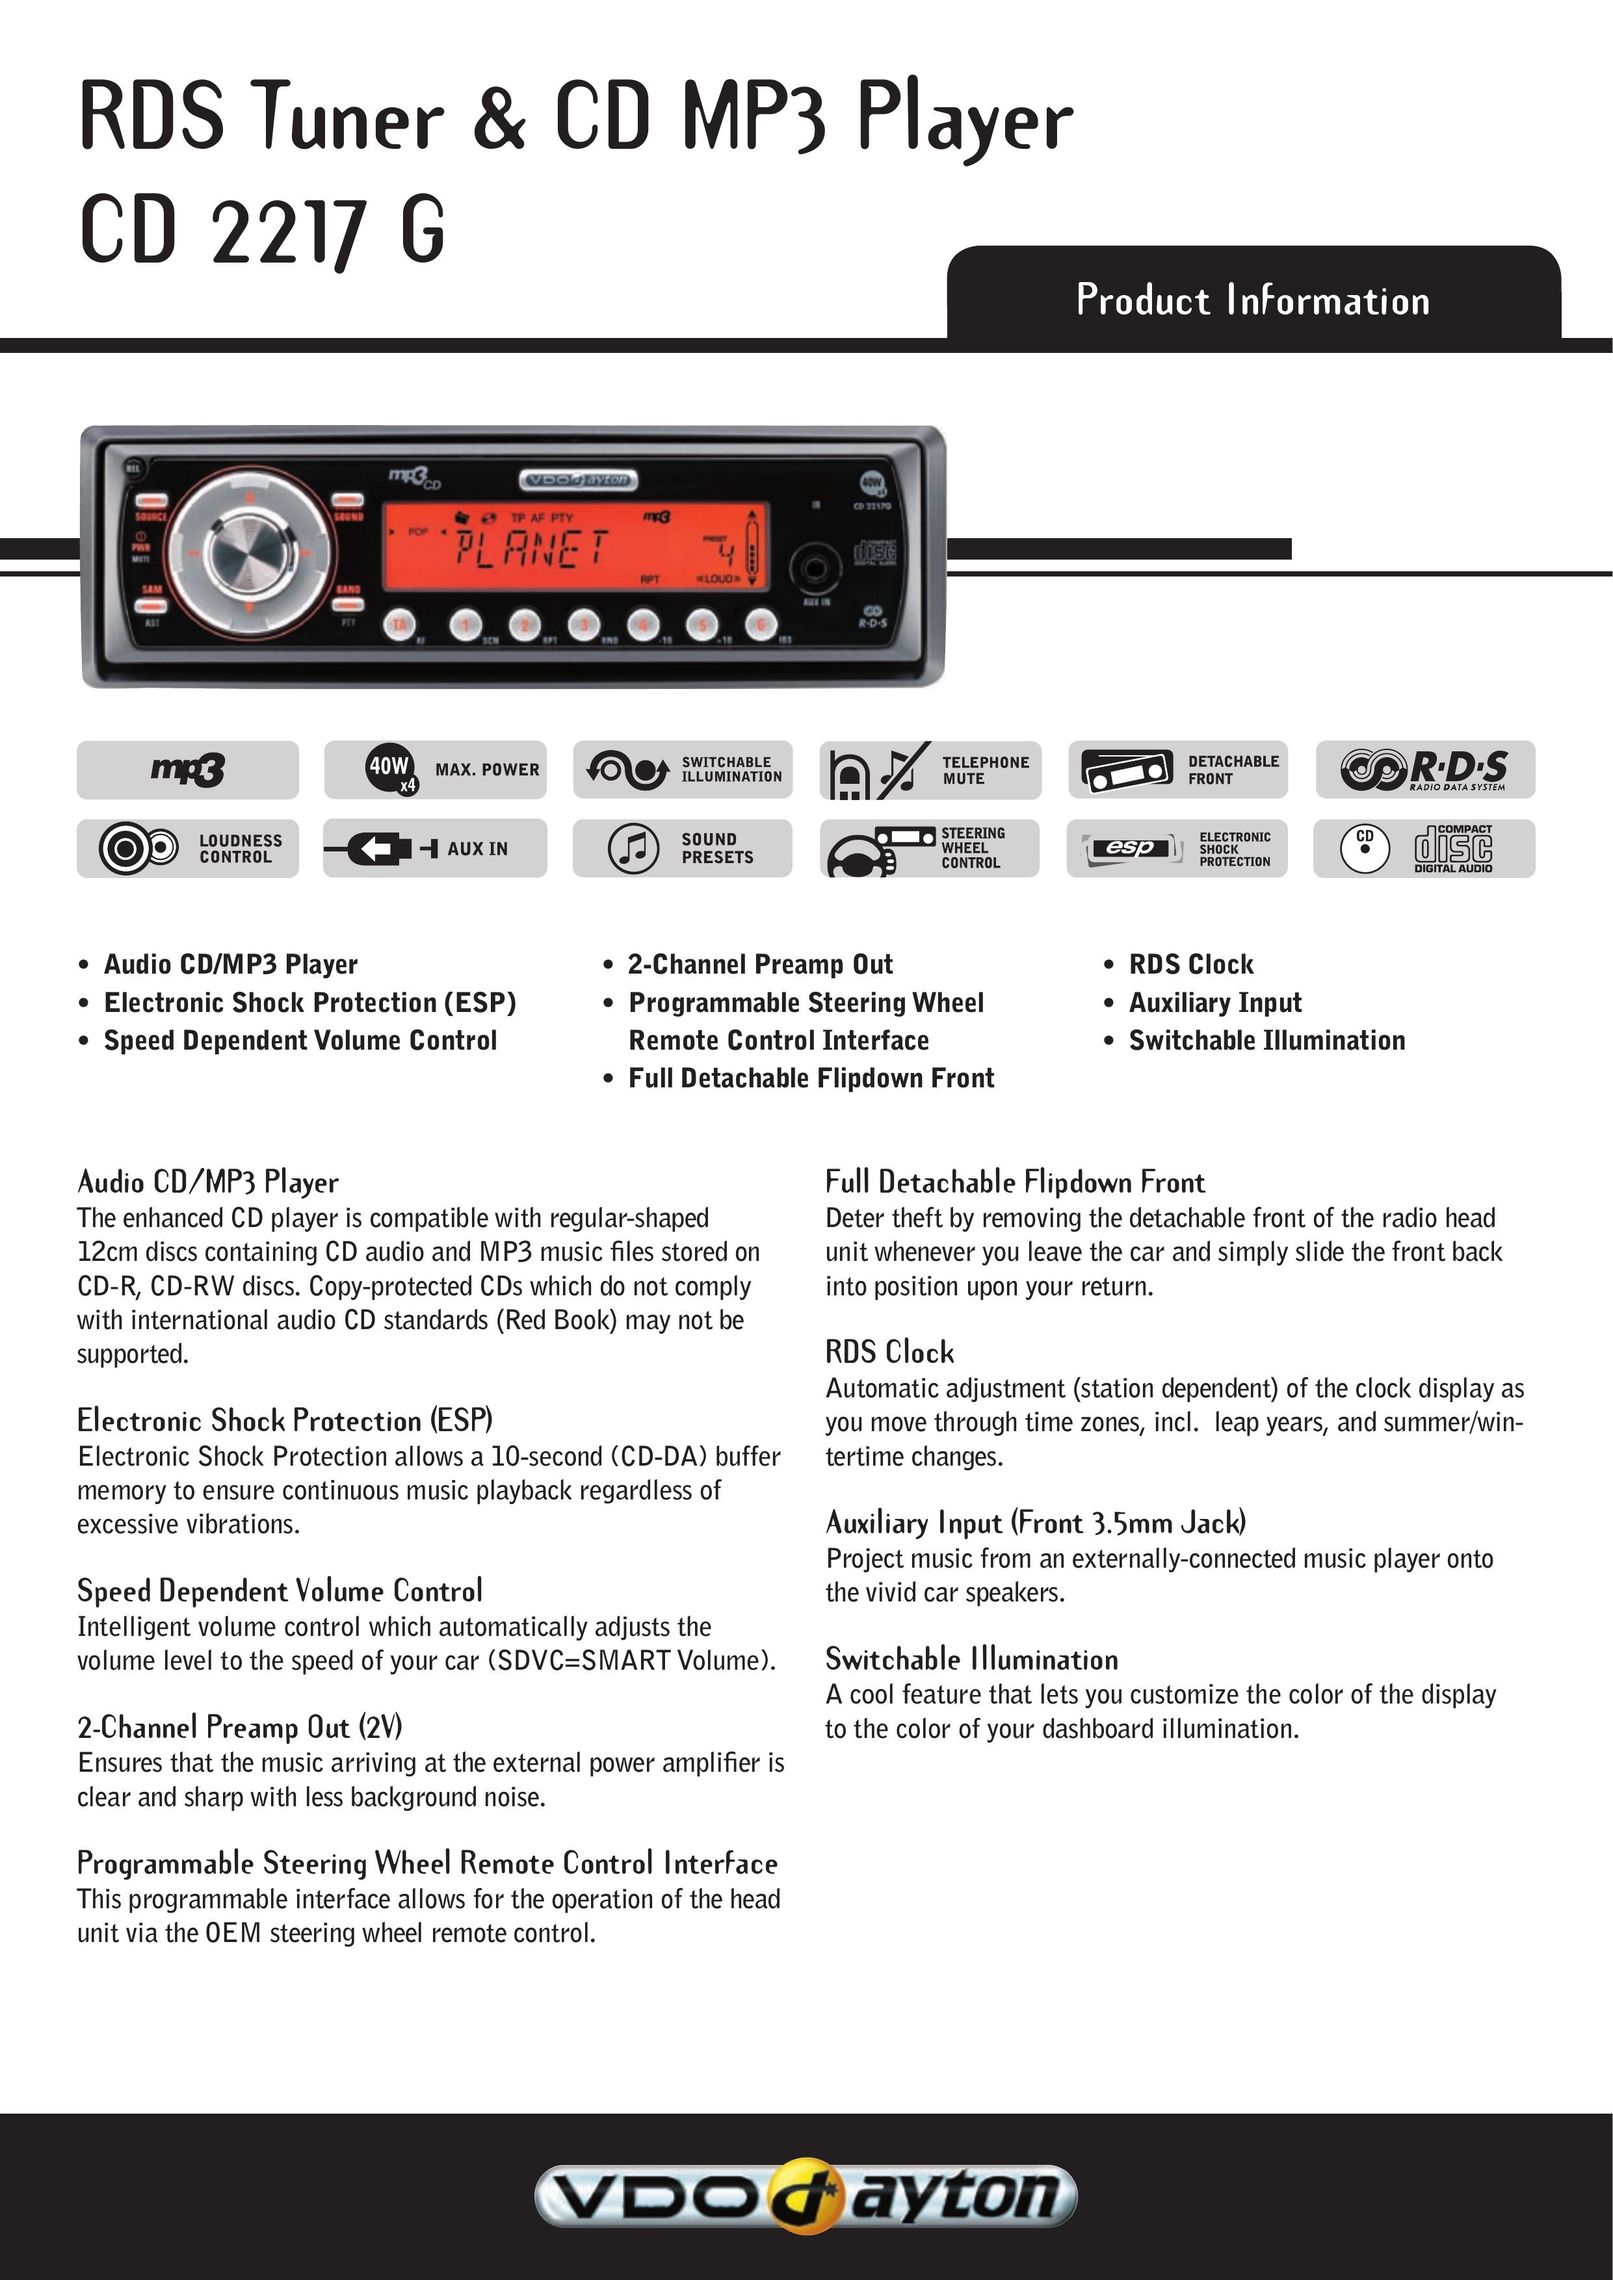 VDO Dayton CD 2217 G Car Stereo System User Manual